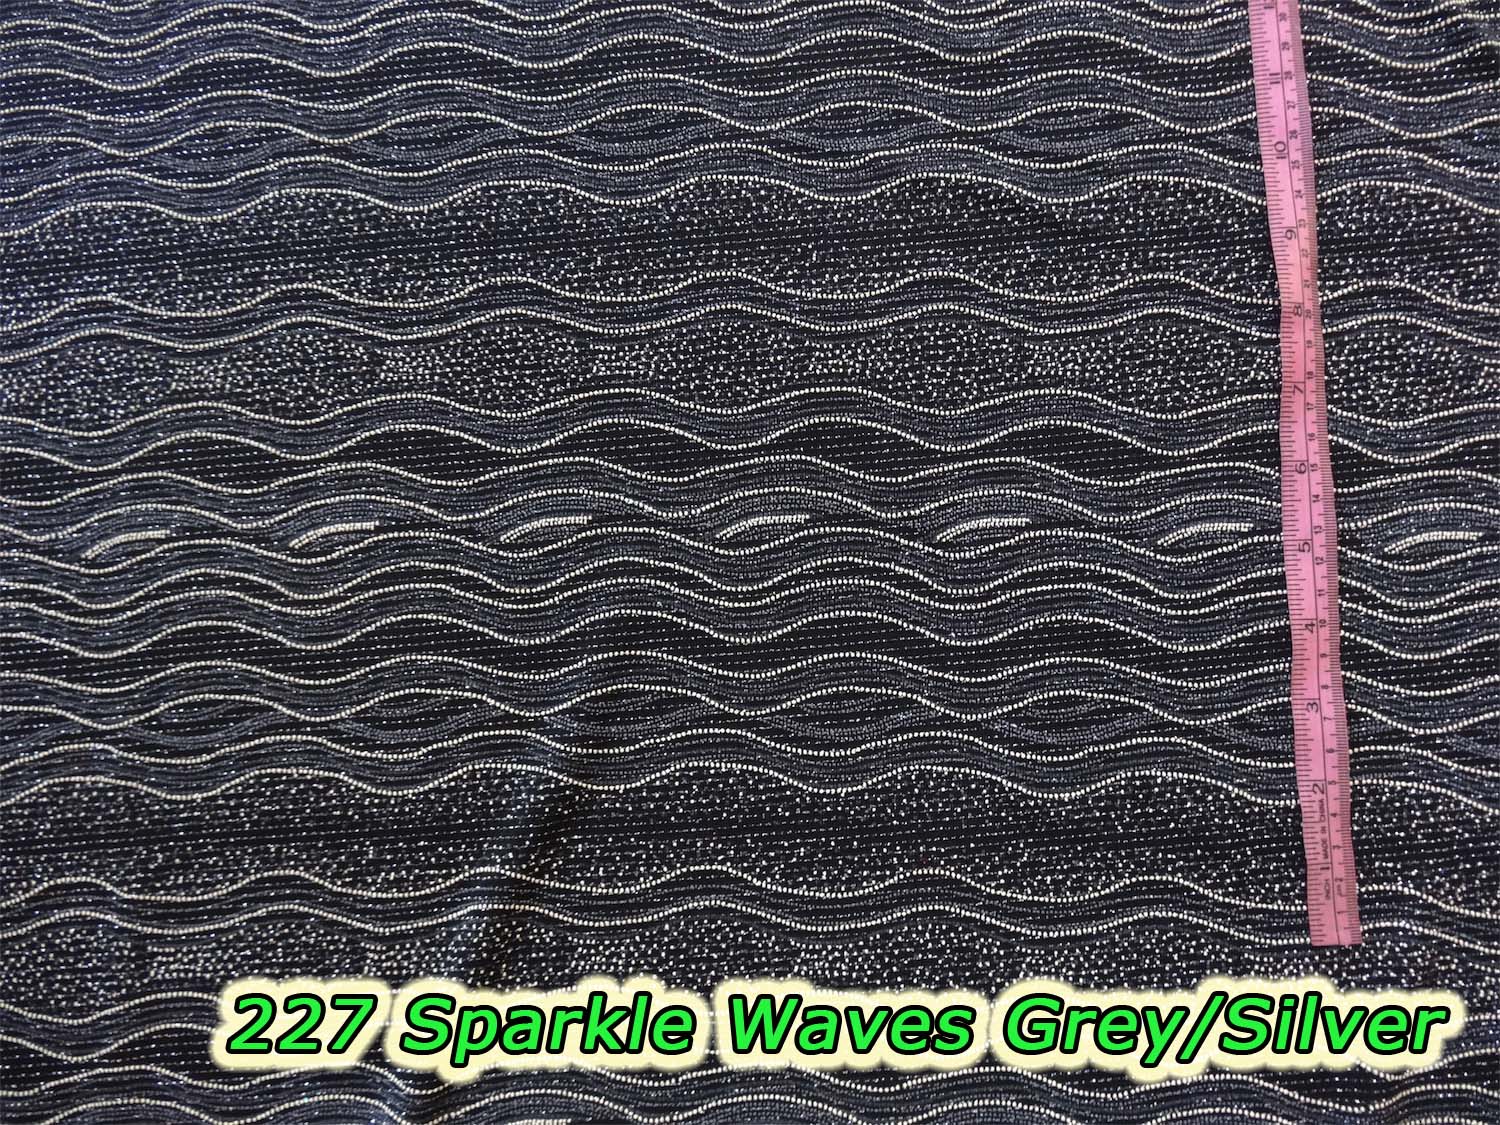 227 Sparkle Waves Grey/Silver